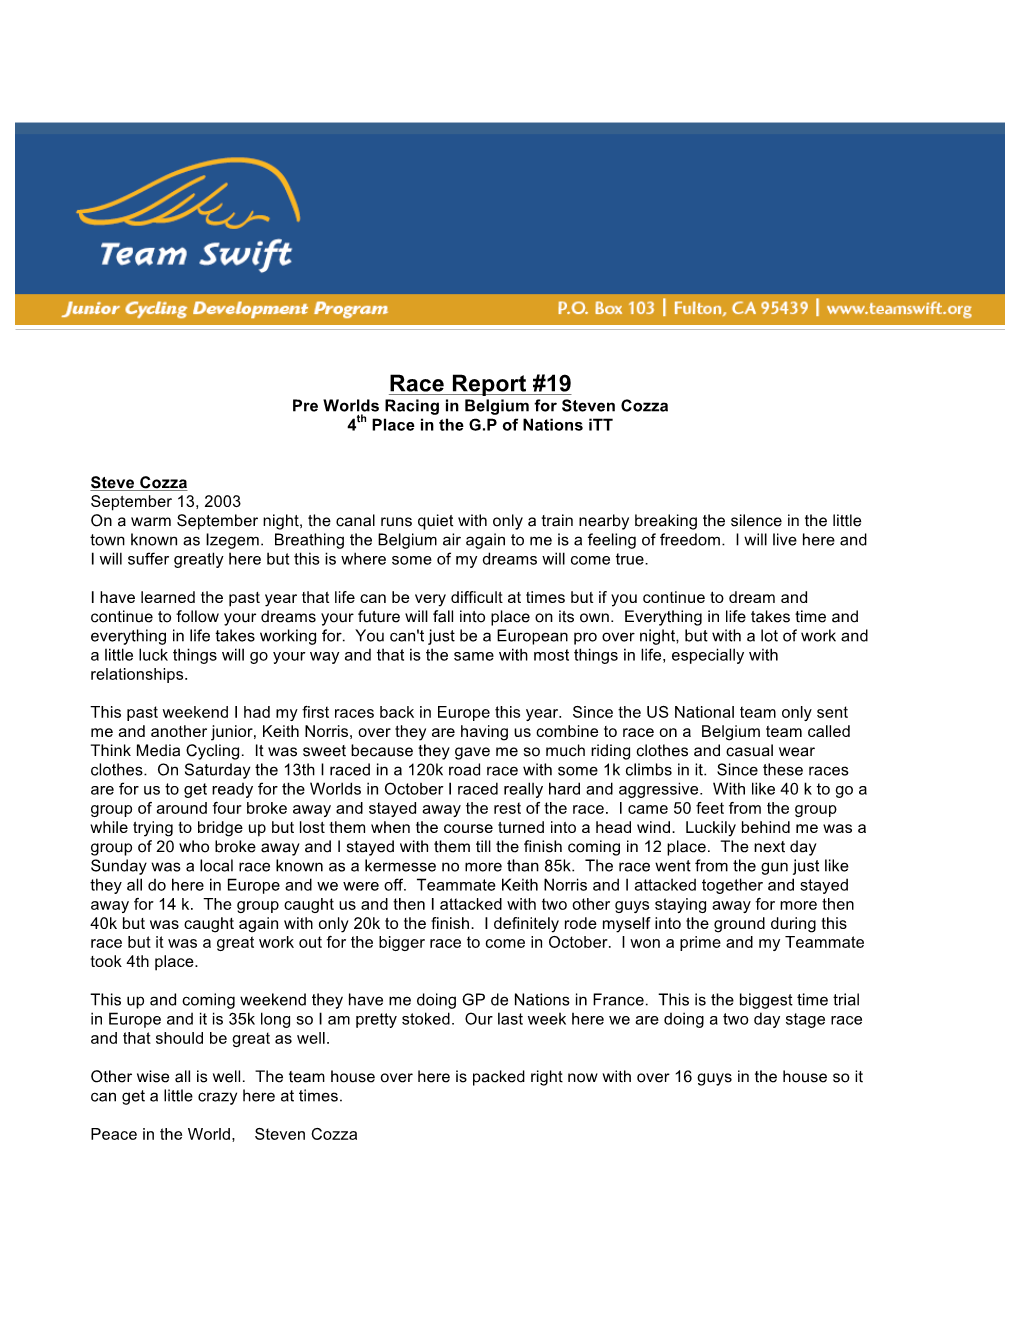 2003 Race Report